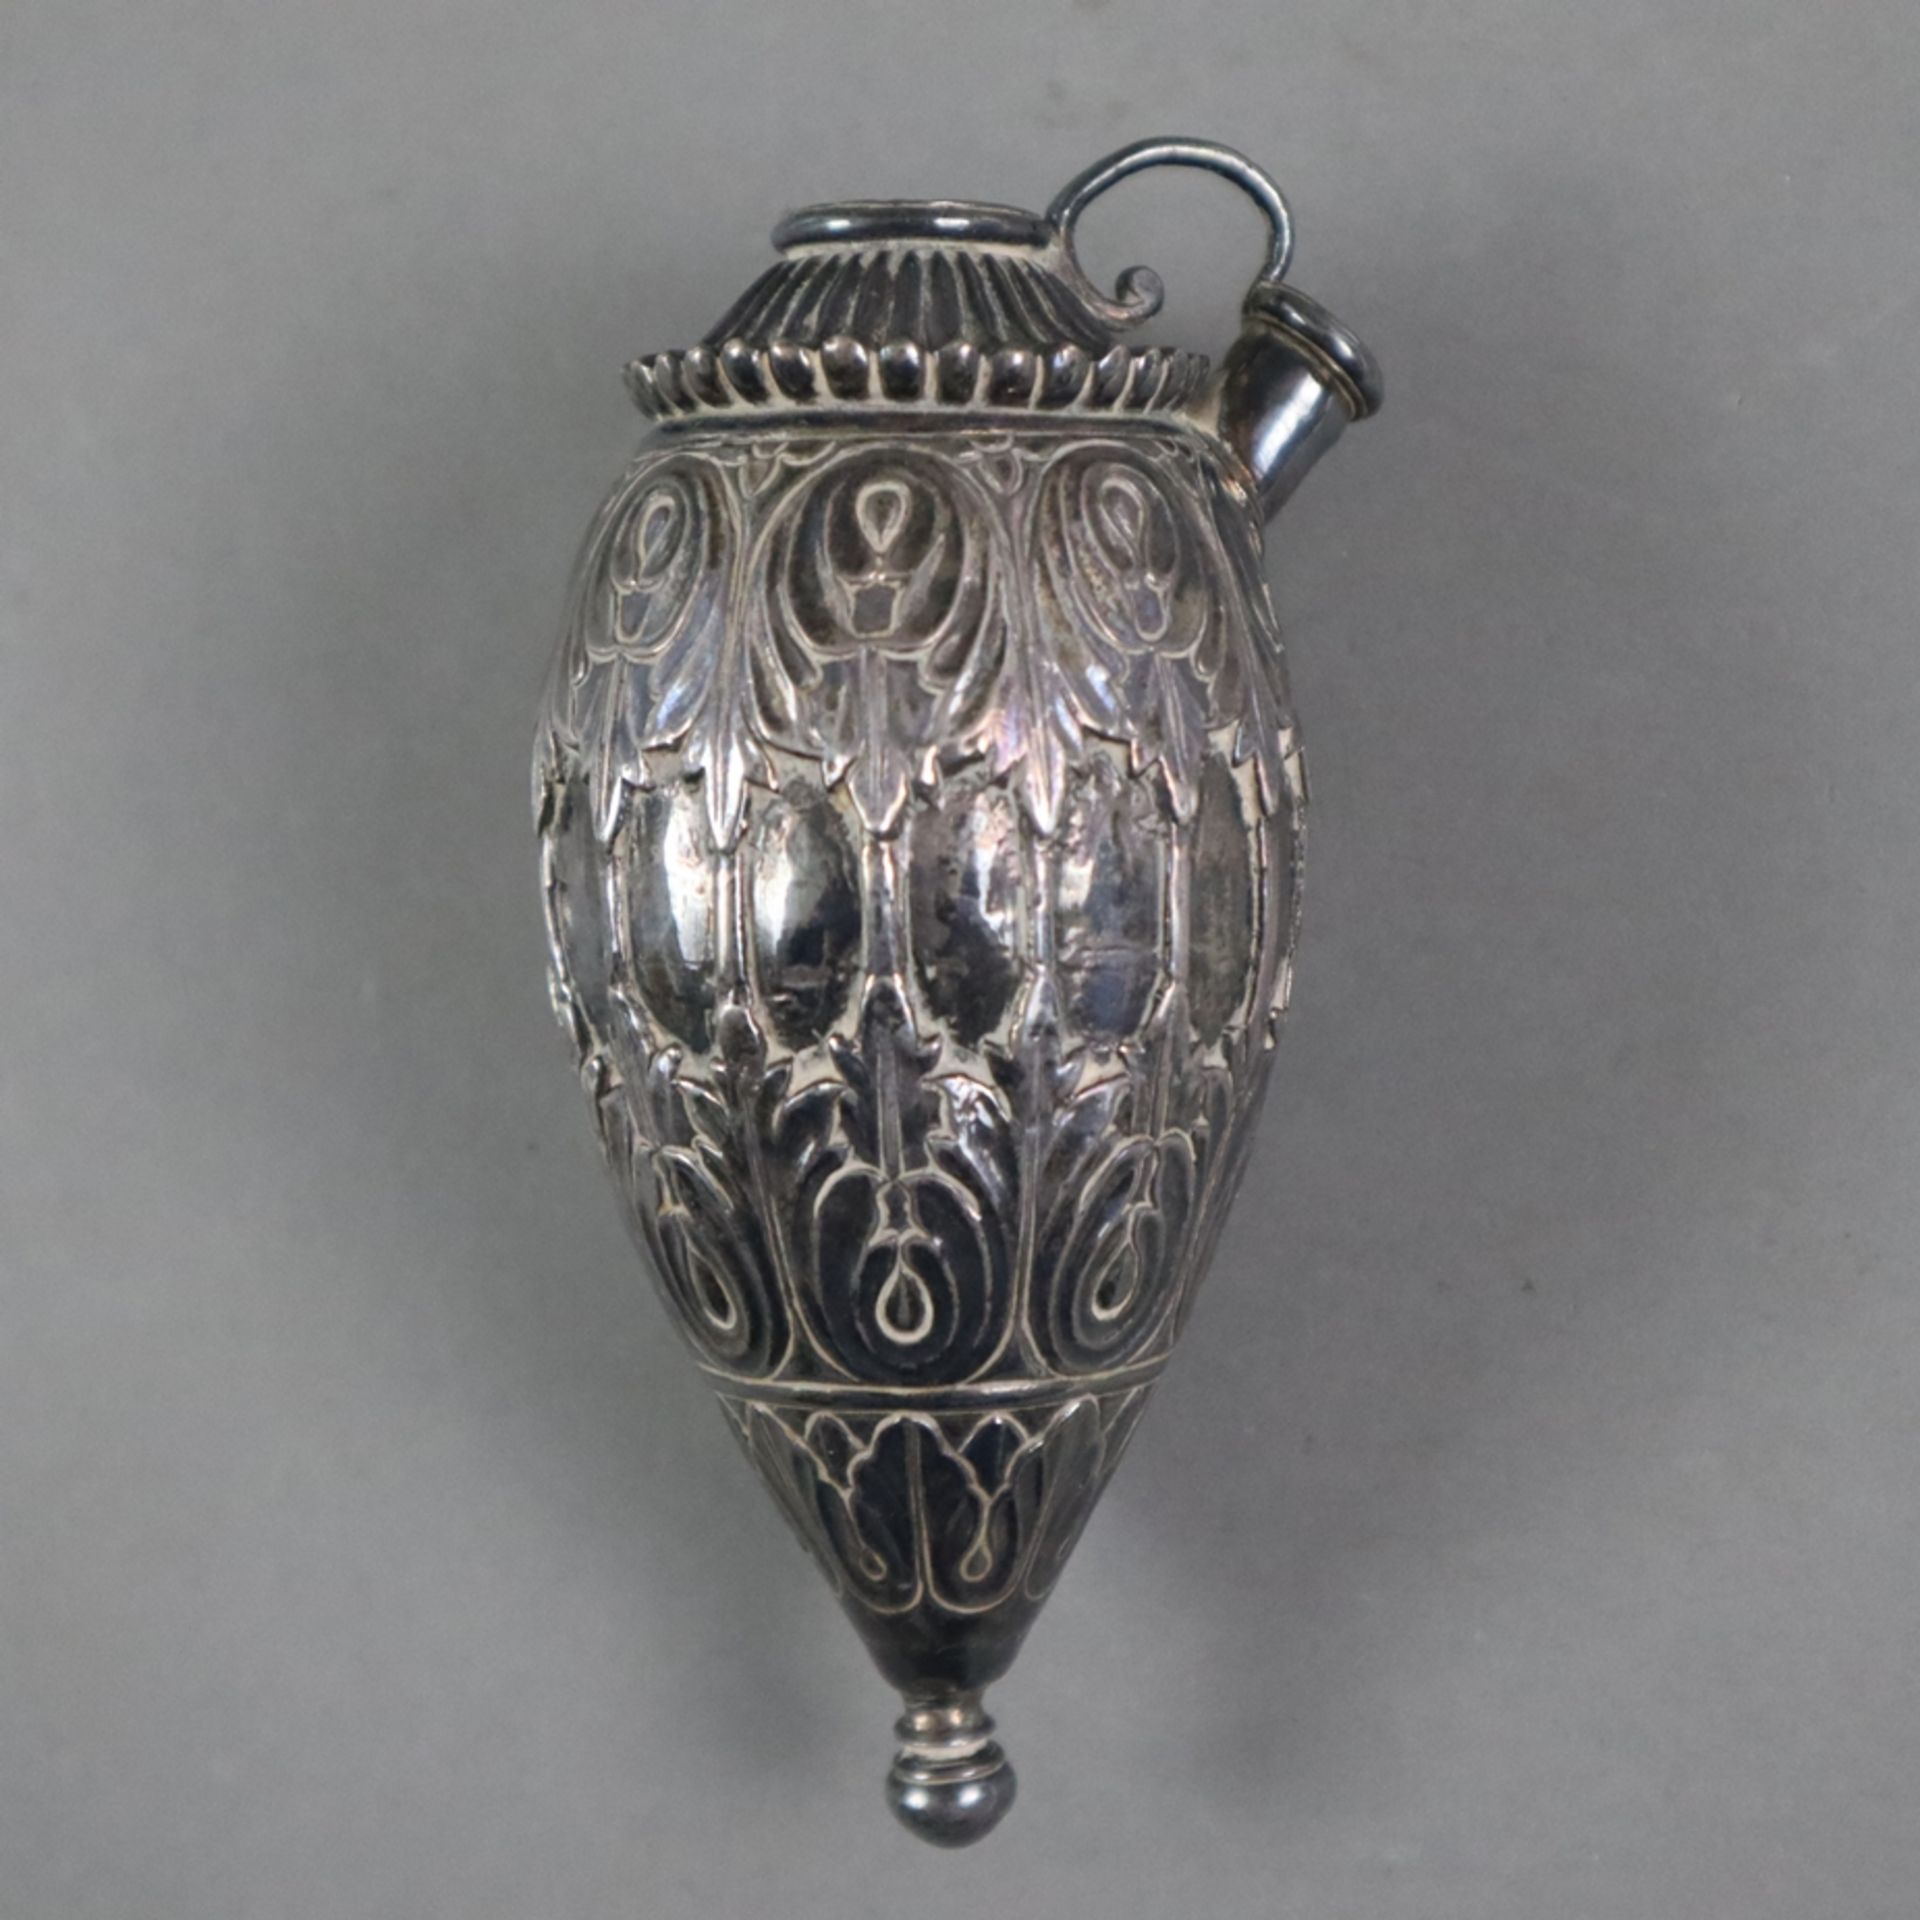 Orientalisches Hookah-Gefäß - wohl Indien, Moghul-Stil, Metall, versilbert, eiförmige Hookah-Körper